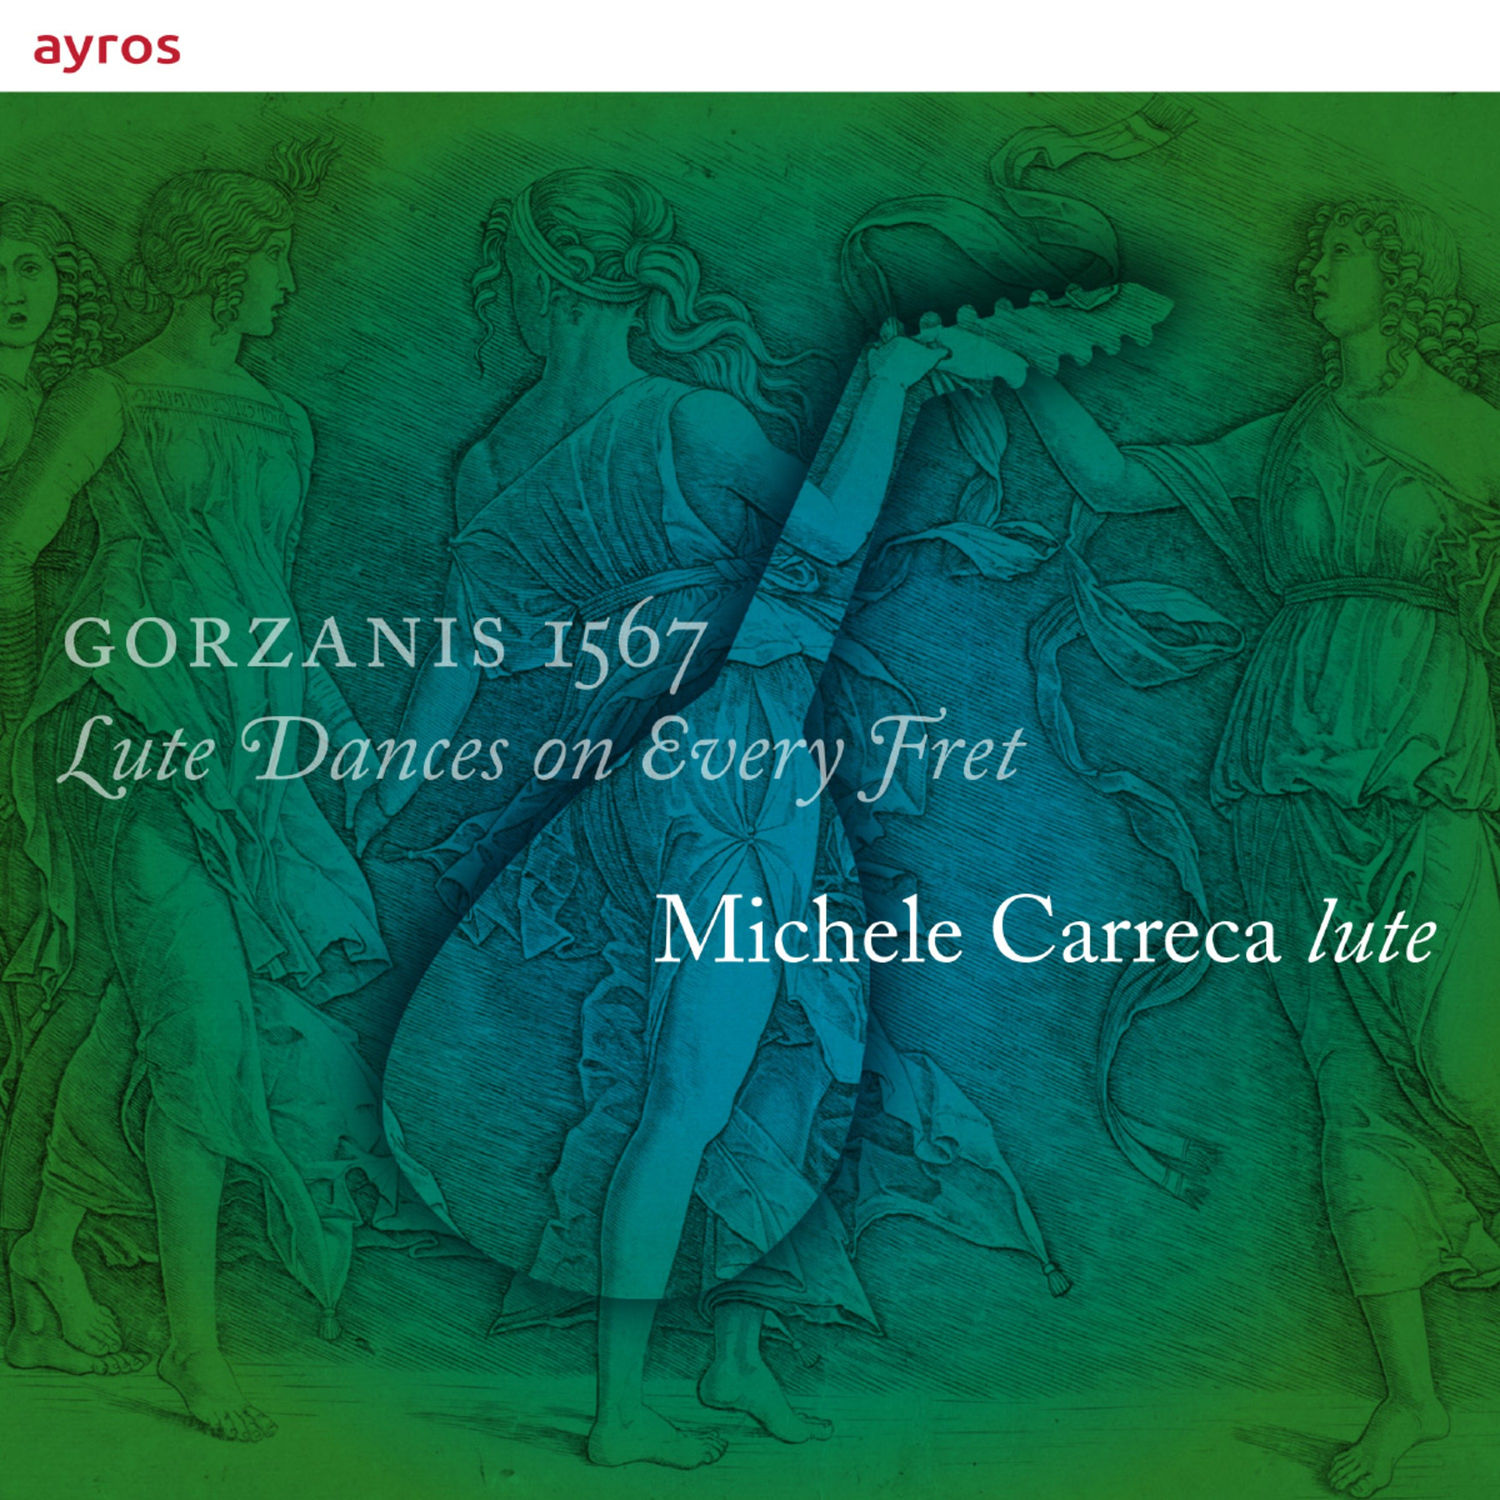 Gorzanis - Lute Dances on Every Fret, 1567 - Michele Carreca